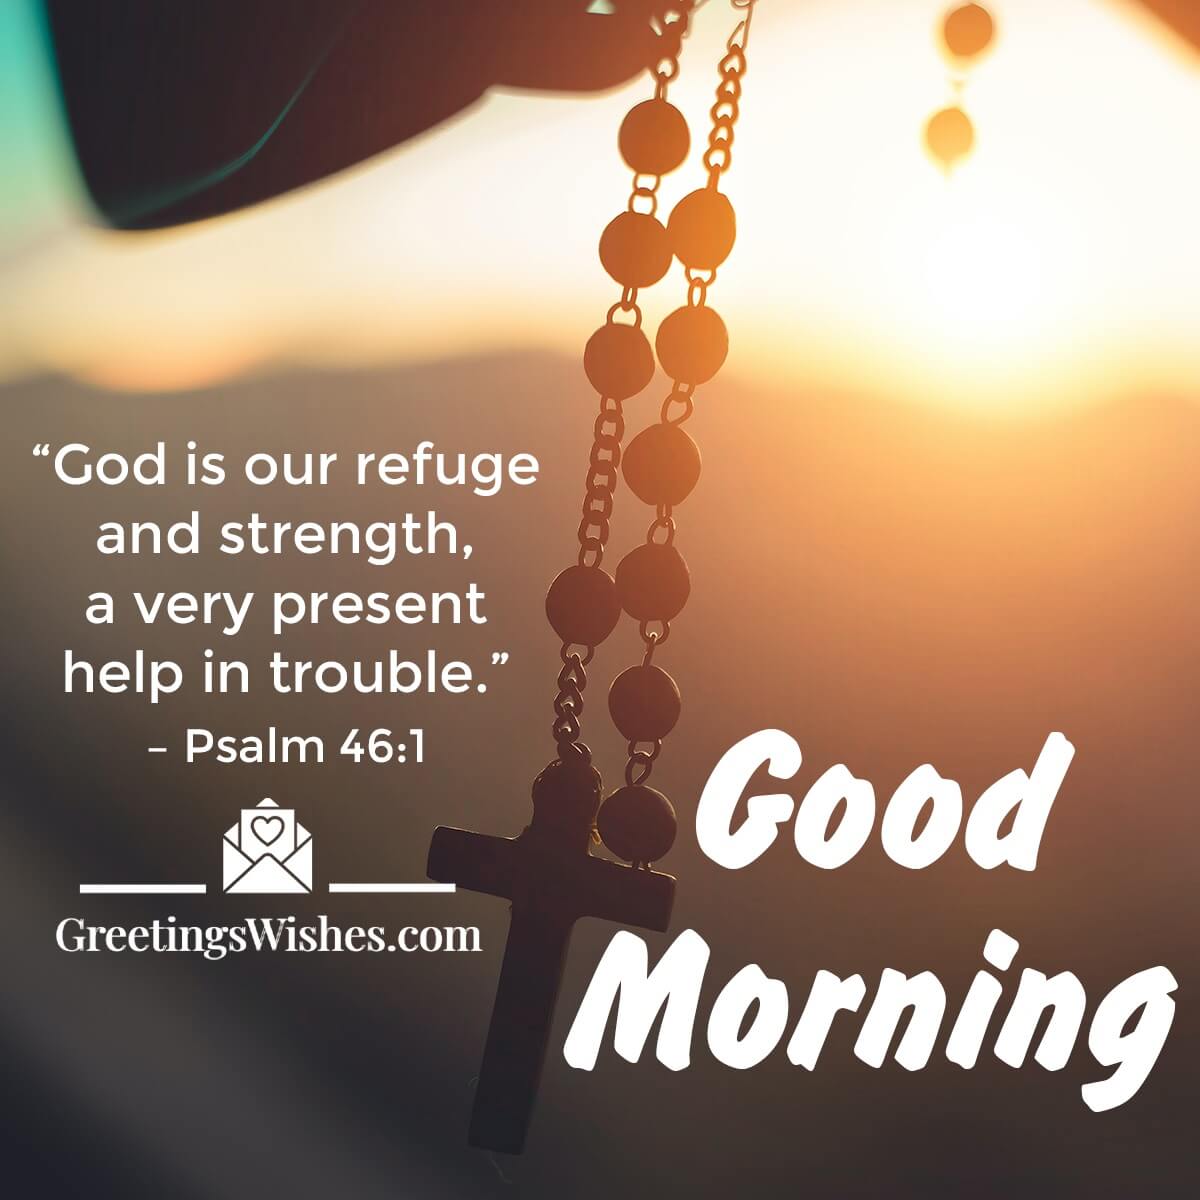 Good Morning Bible Verses - Greetings Wishes